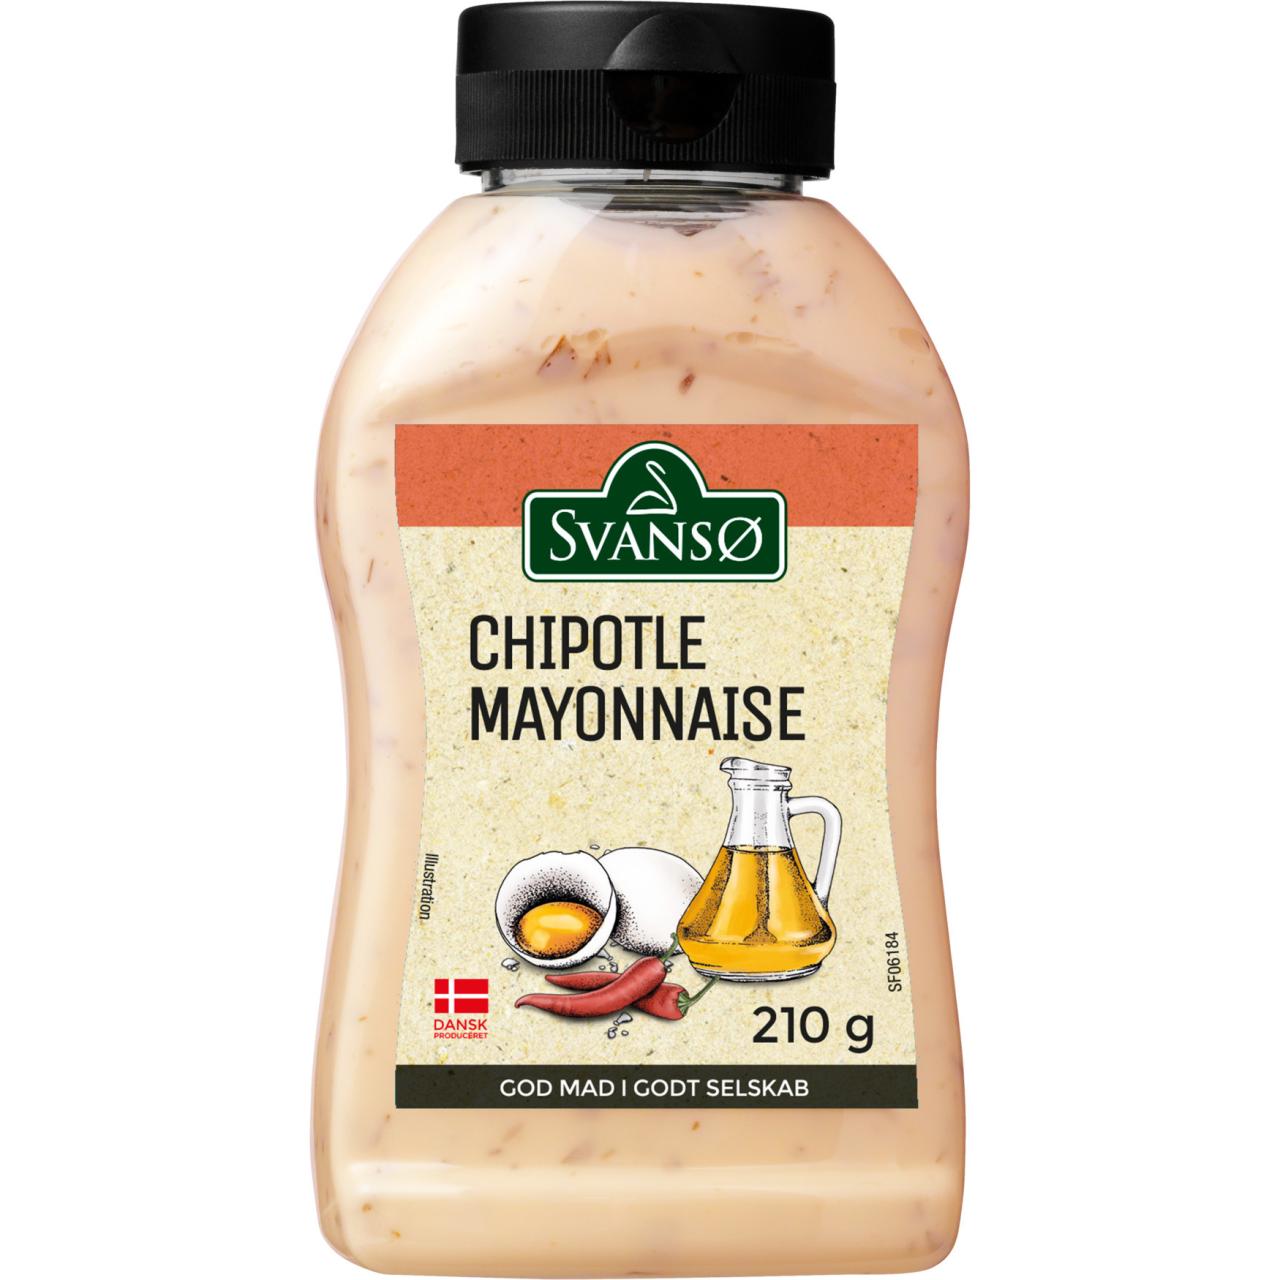 Svansø Chipotle Mayonnaise 210g